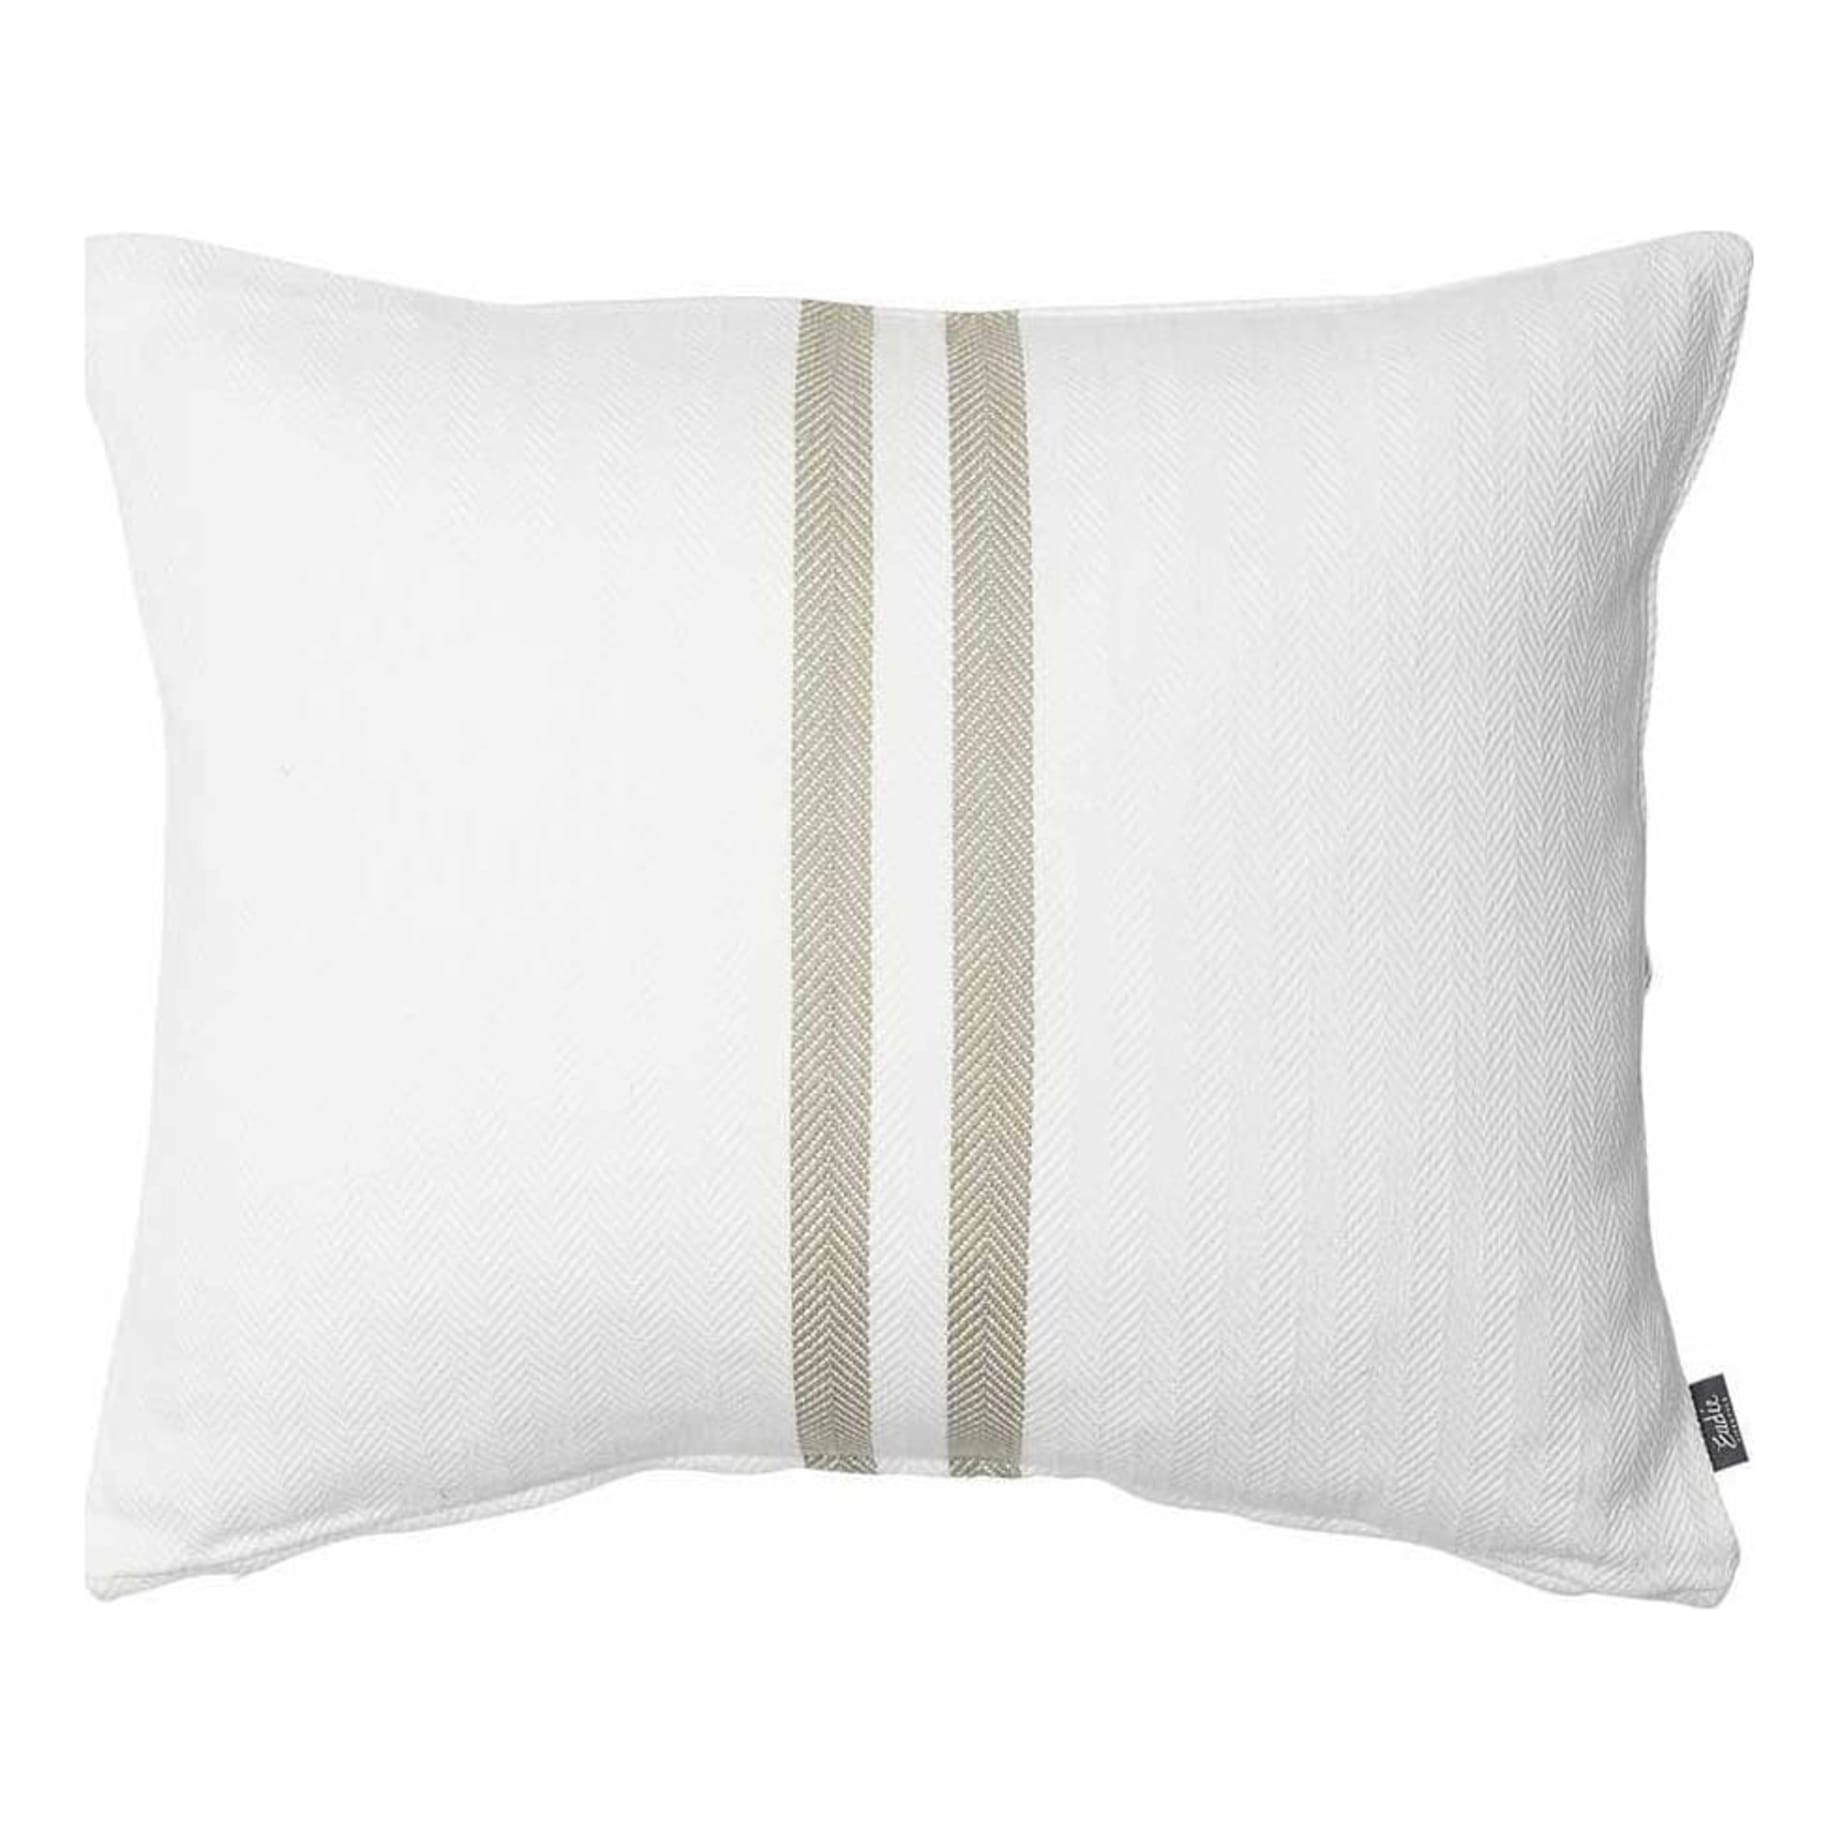 Simpatico Feather Cushion 50x60cm in White/Natural